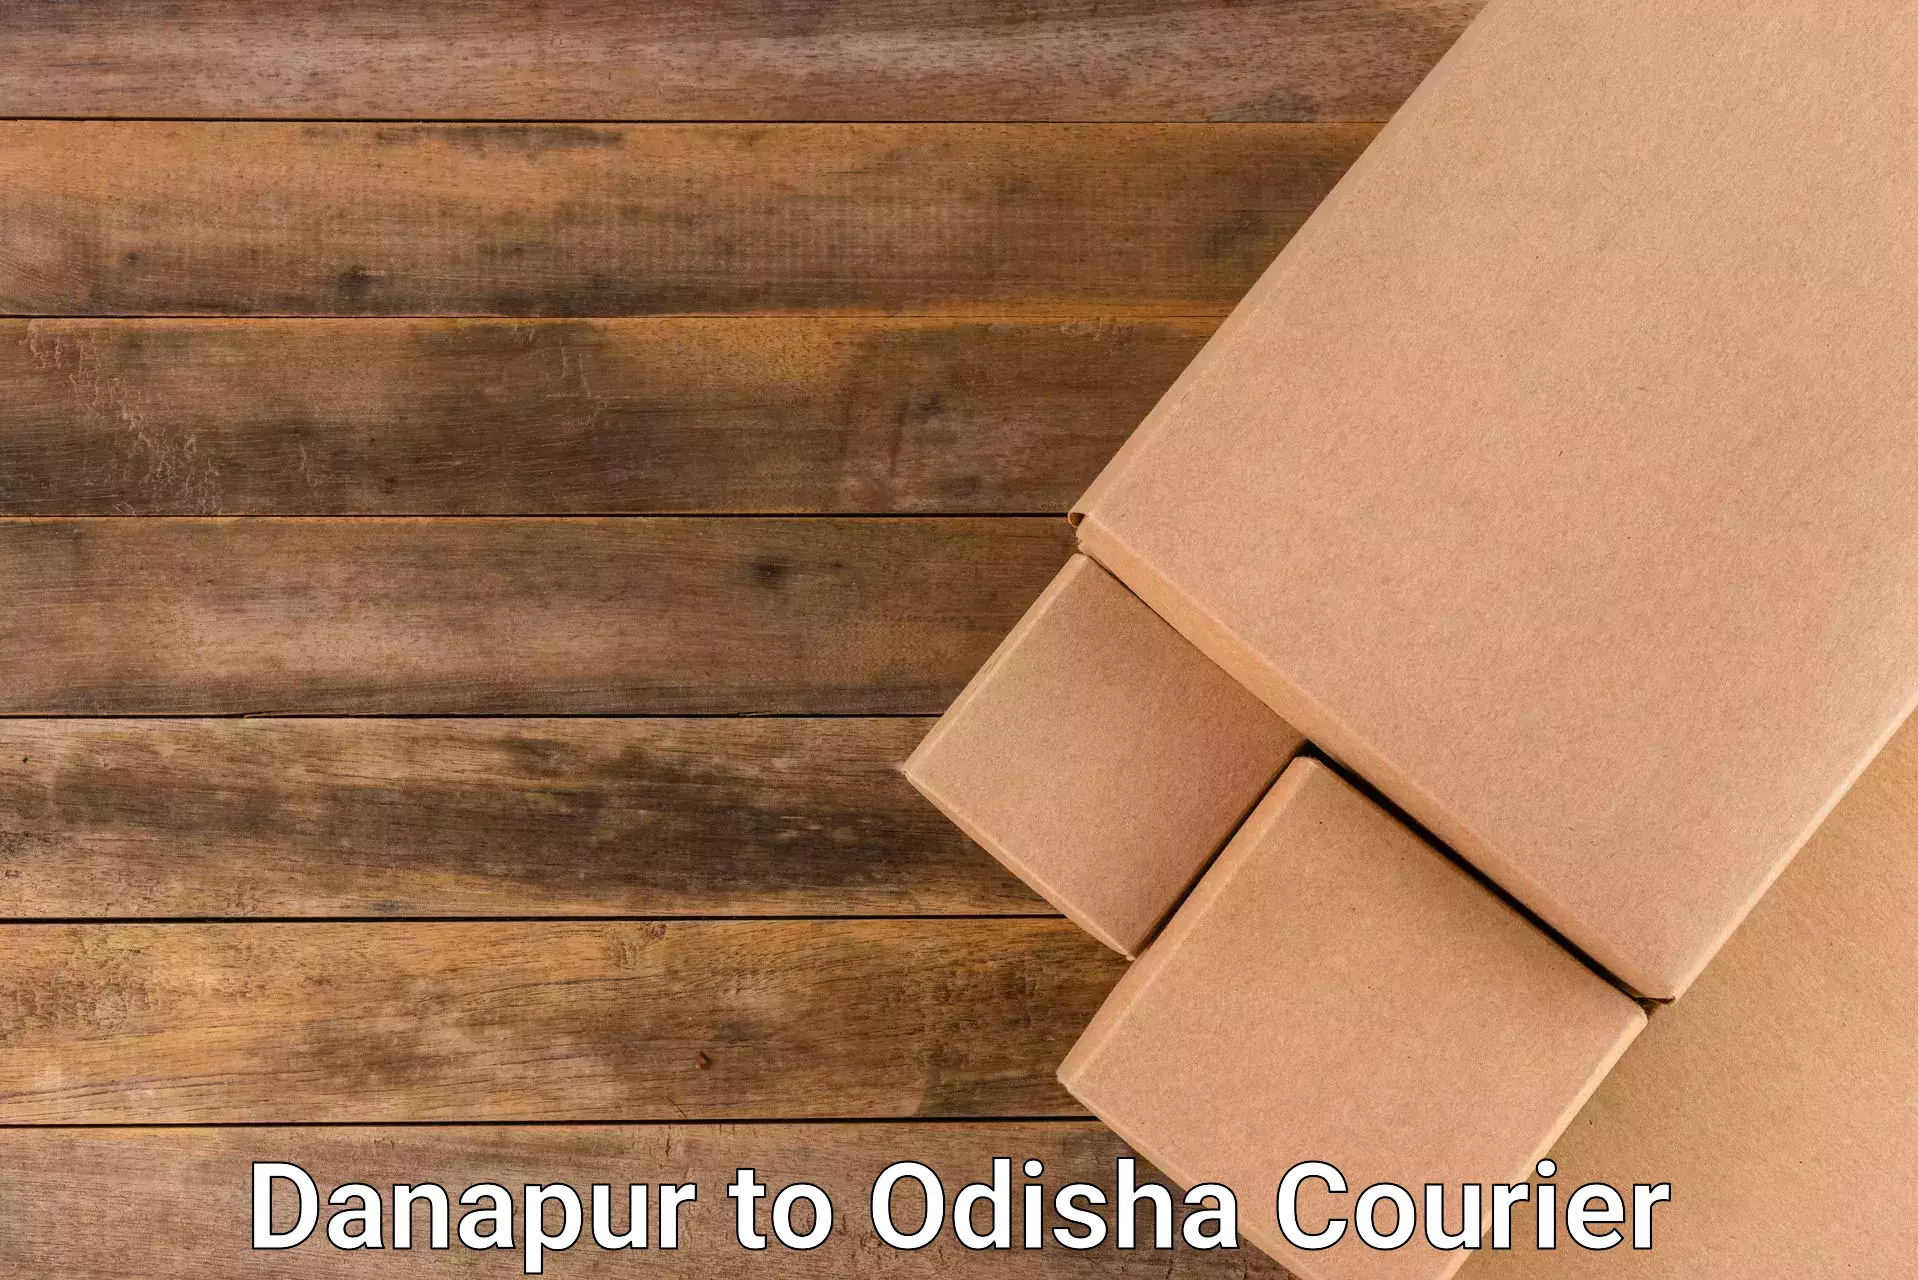 Enhanced tracking features Danapur to Udala